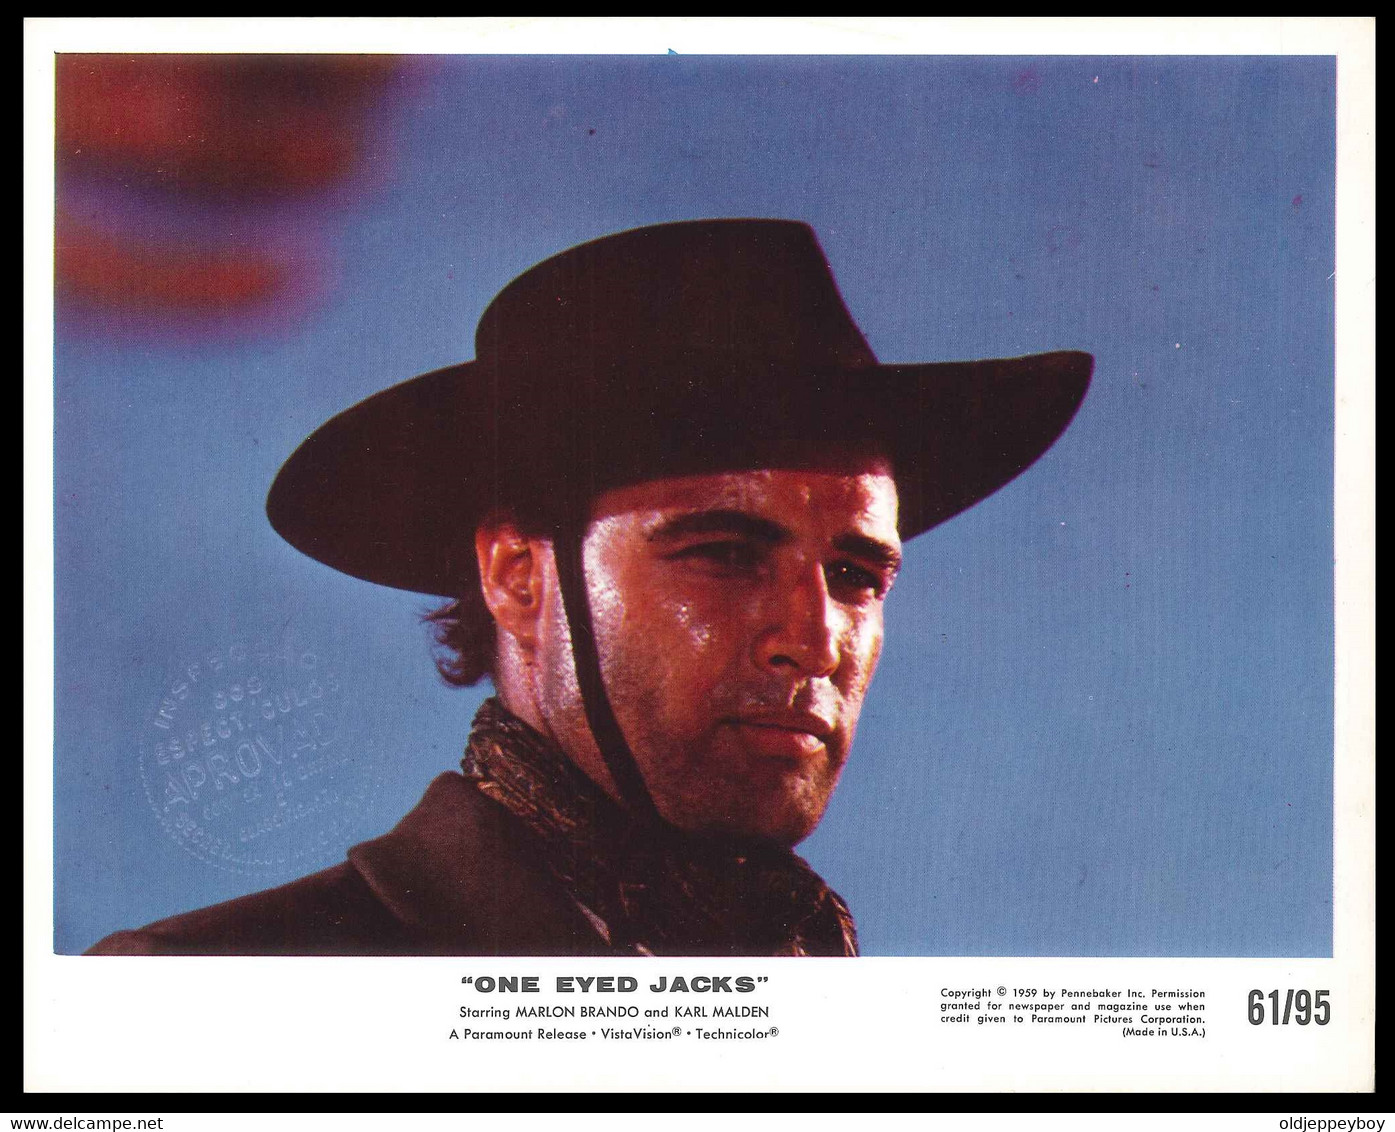 One Eyed Jacks-Marlon Brando-Karl Malden - 20 X 25 Cm - Colour - Movie Still- Western Paramount Release Technicolour - Photos